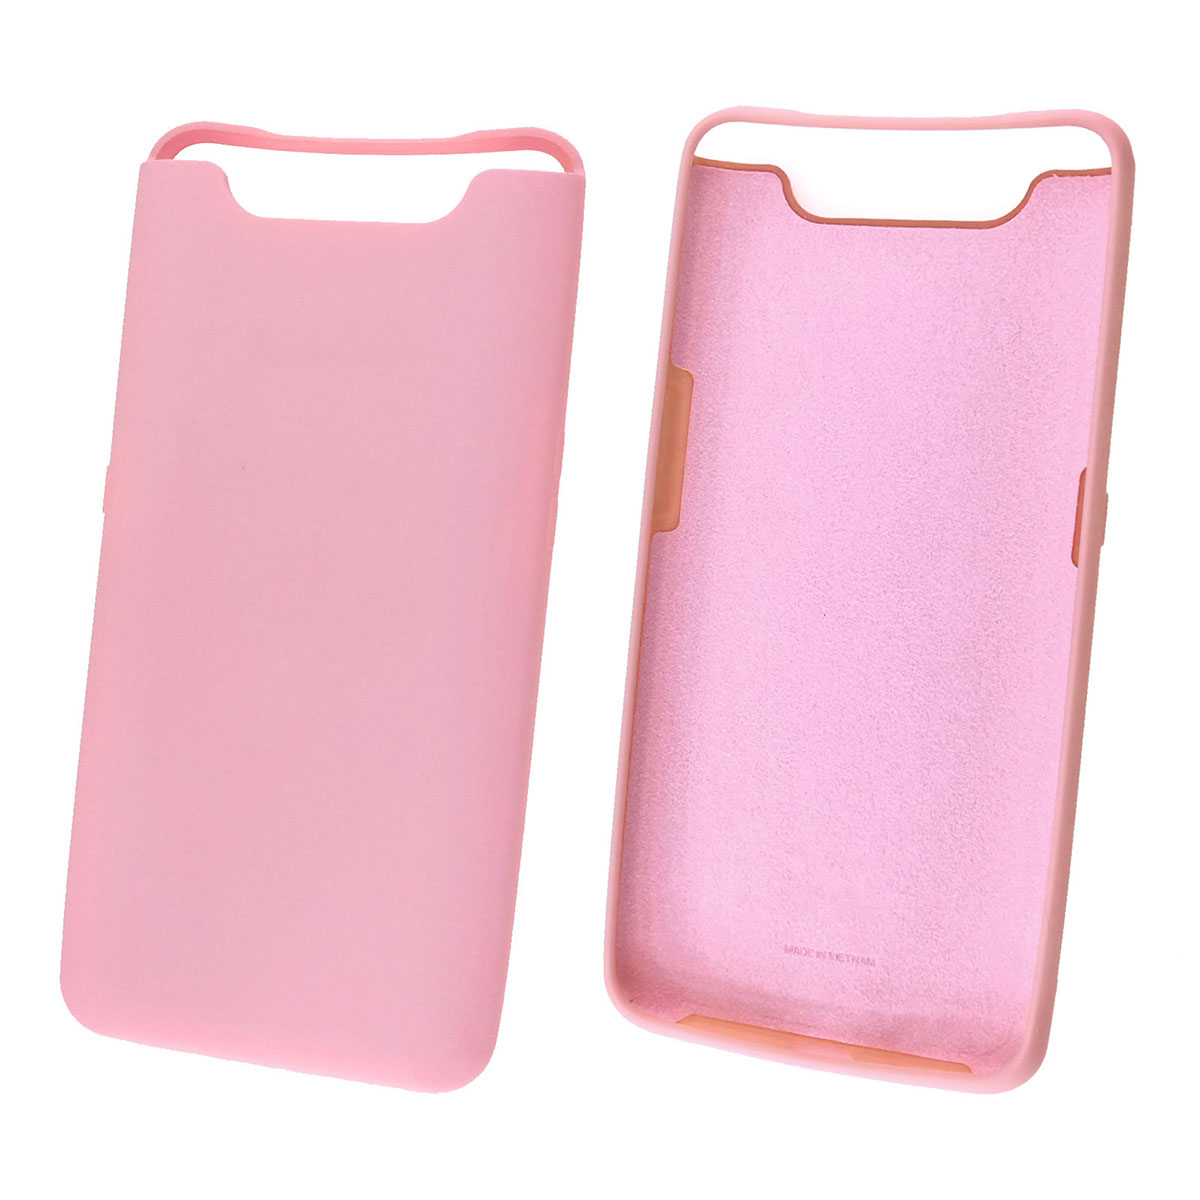 Чехол накладка Silicon Cover для Samsung A80 2019 (SM-A805), силикон, бархат, цвет светло розовый.